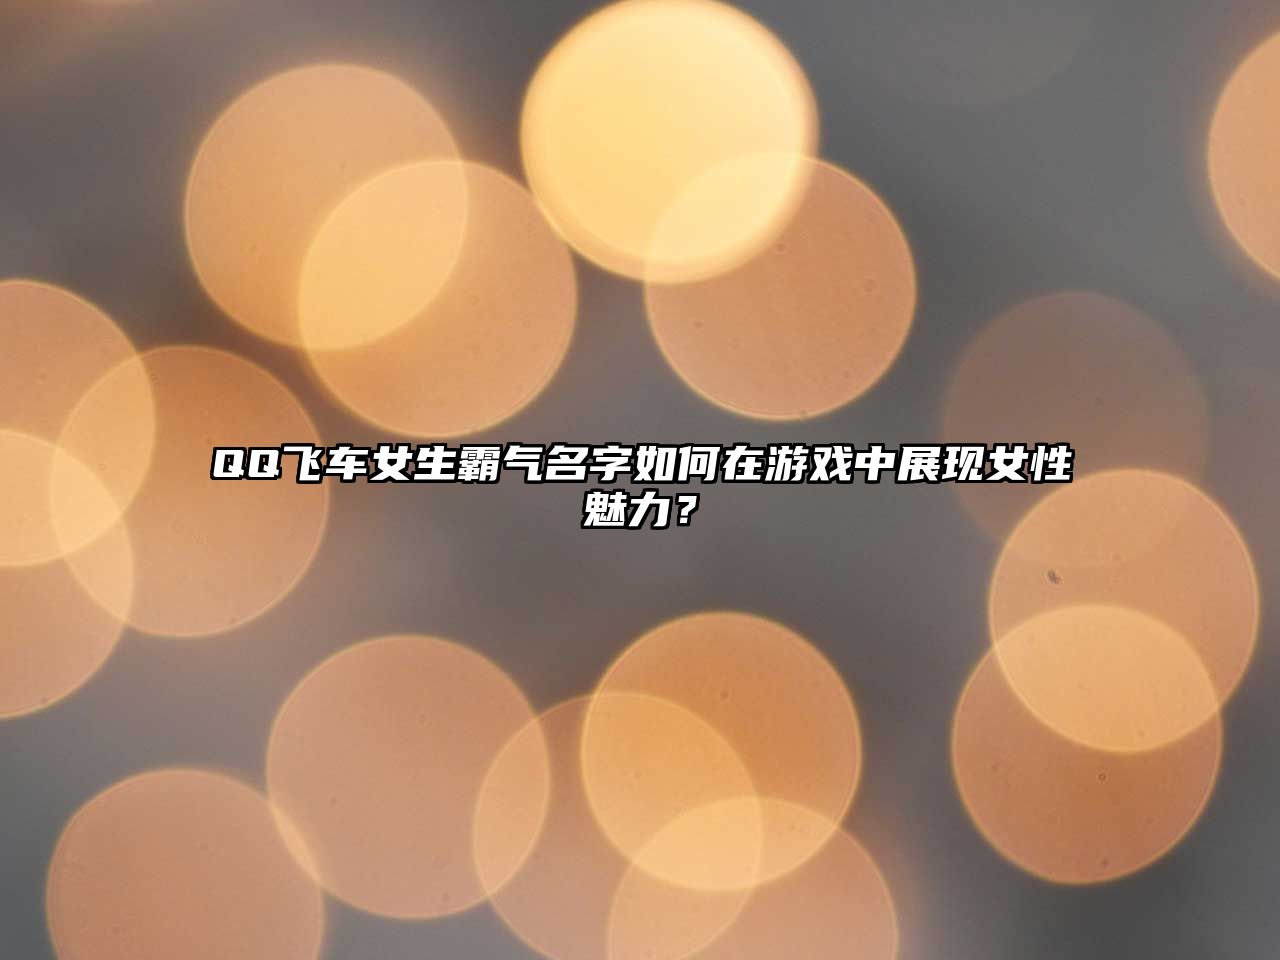 QQ飞车女生霸气名字如何在游戏中展现女性魅力？